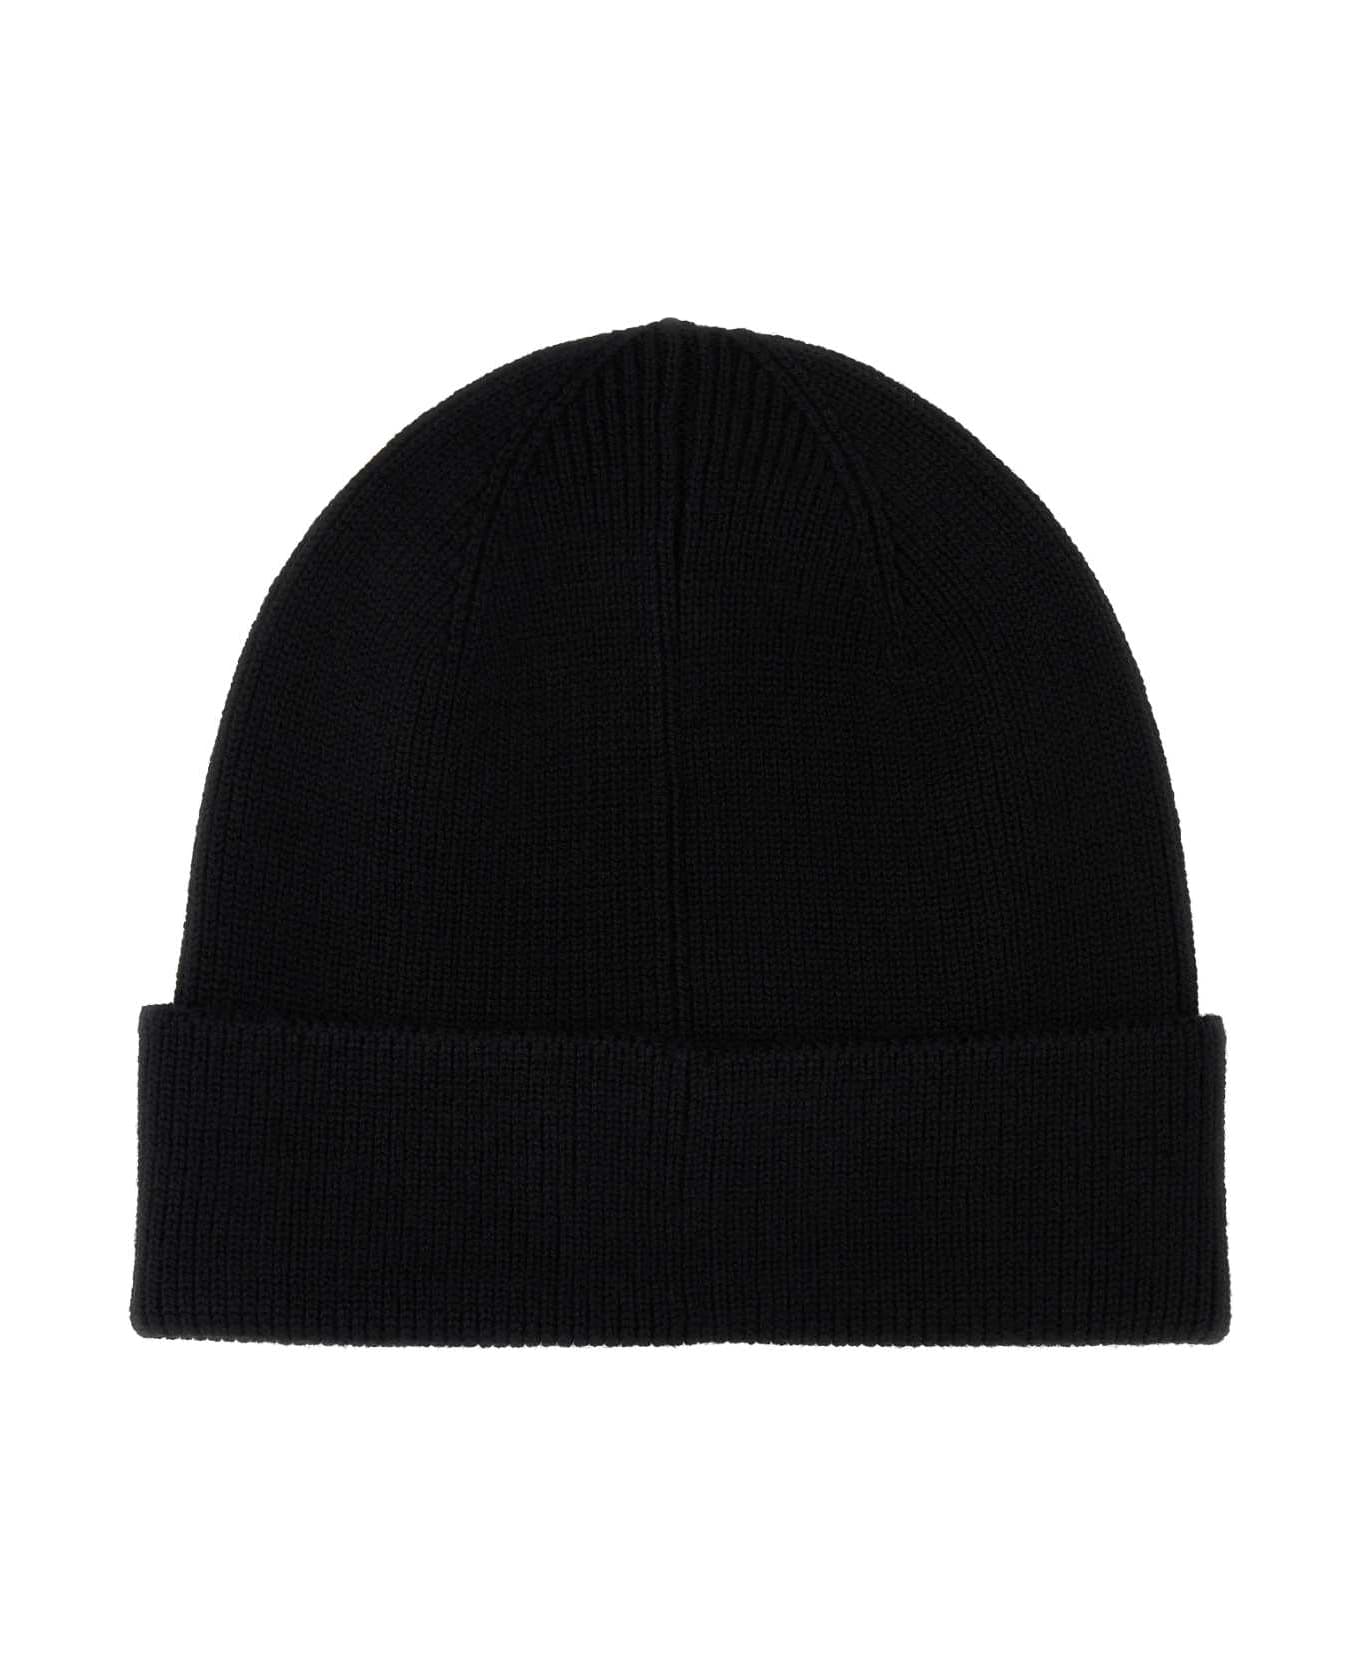 Études Black Wool Blend Beanie Hat - BLACK